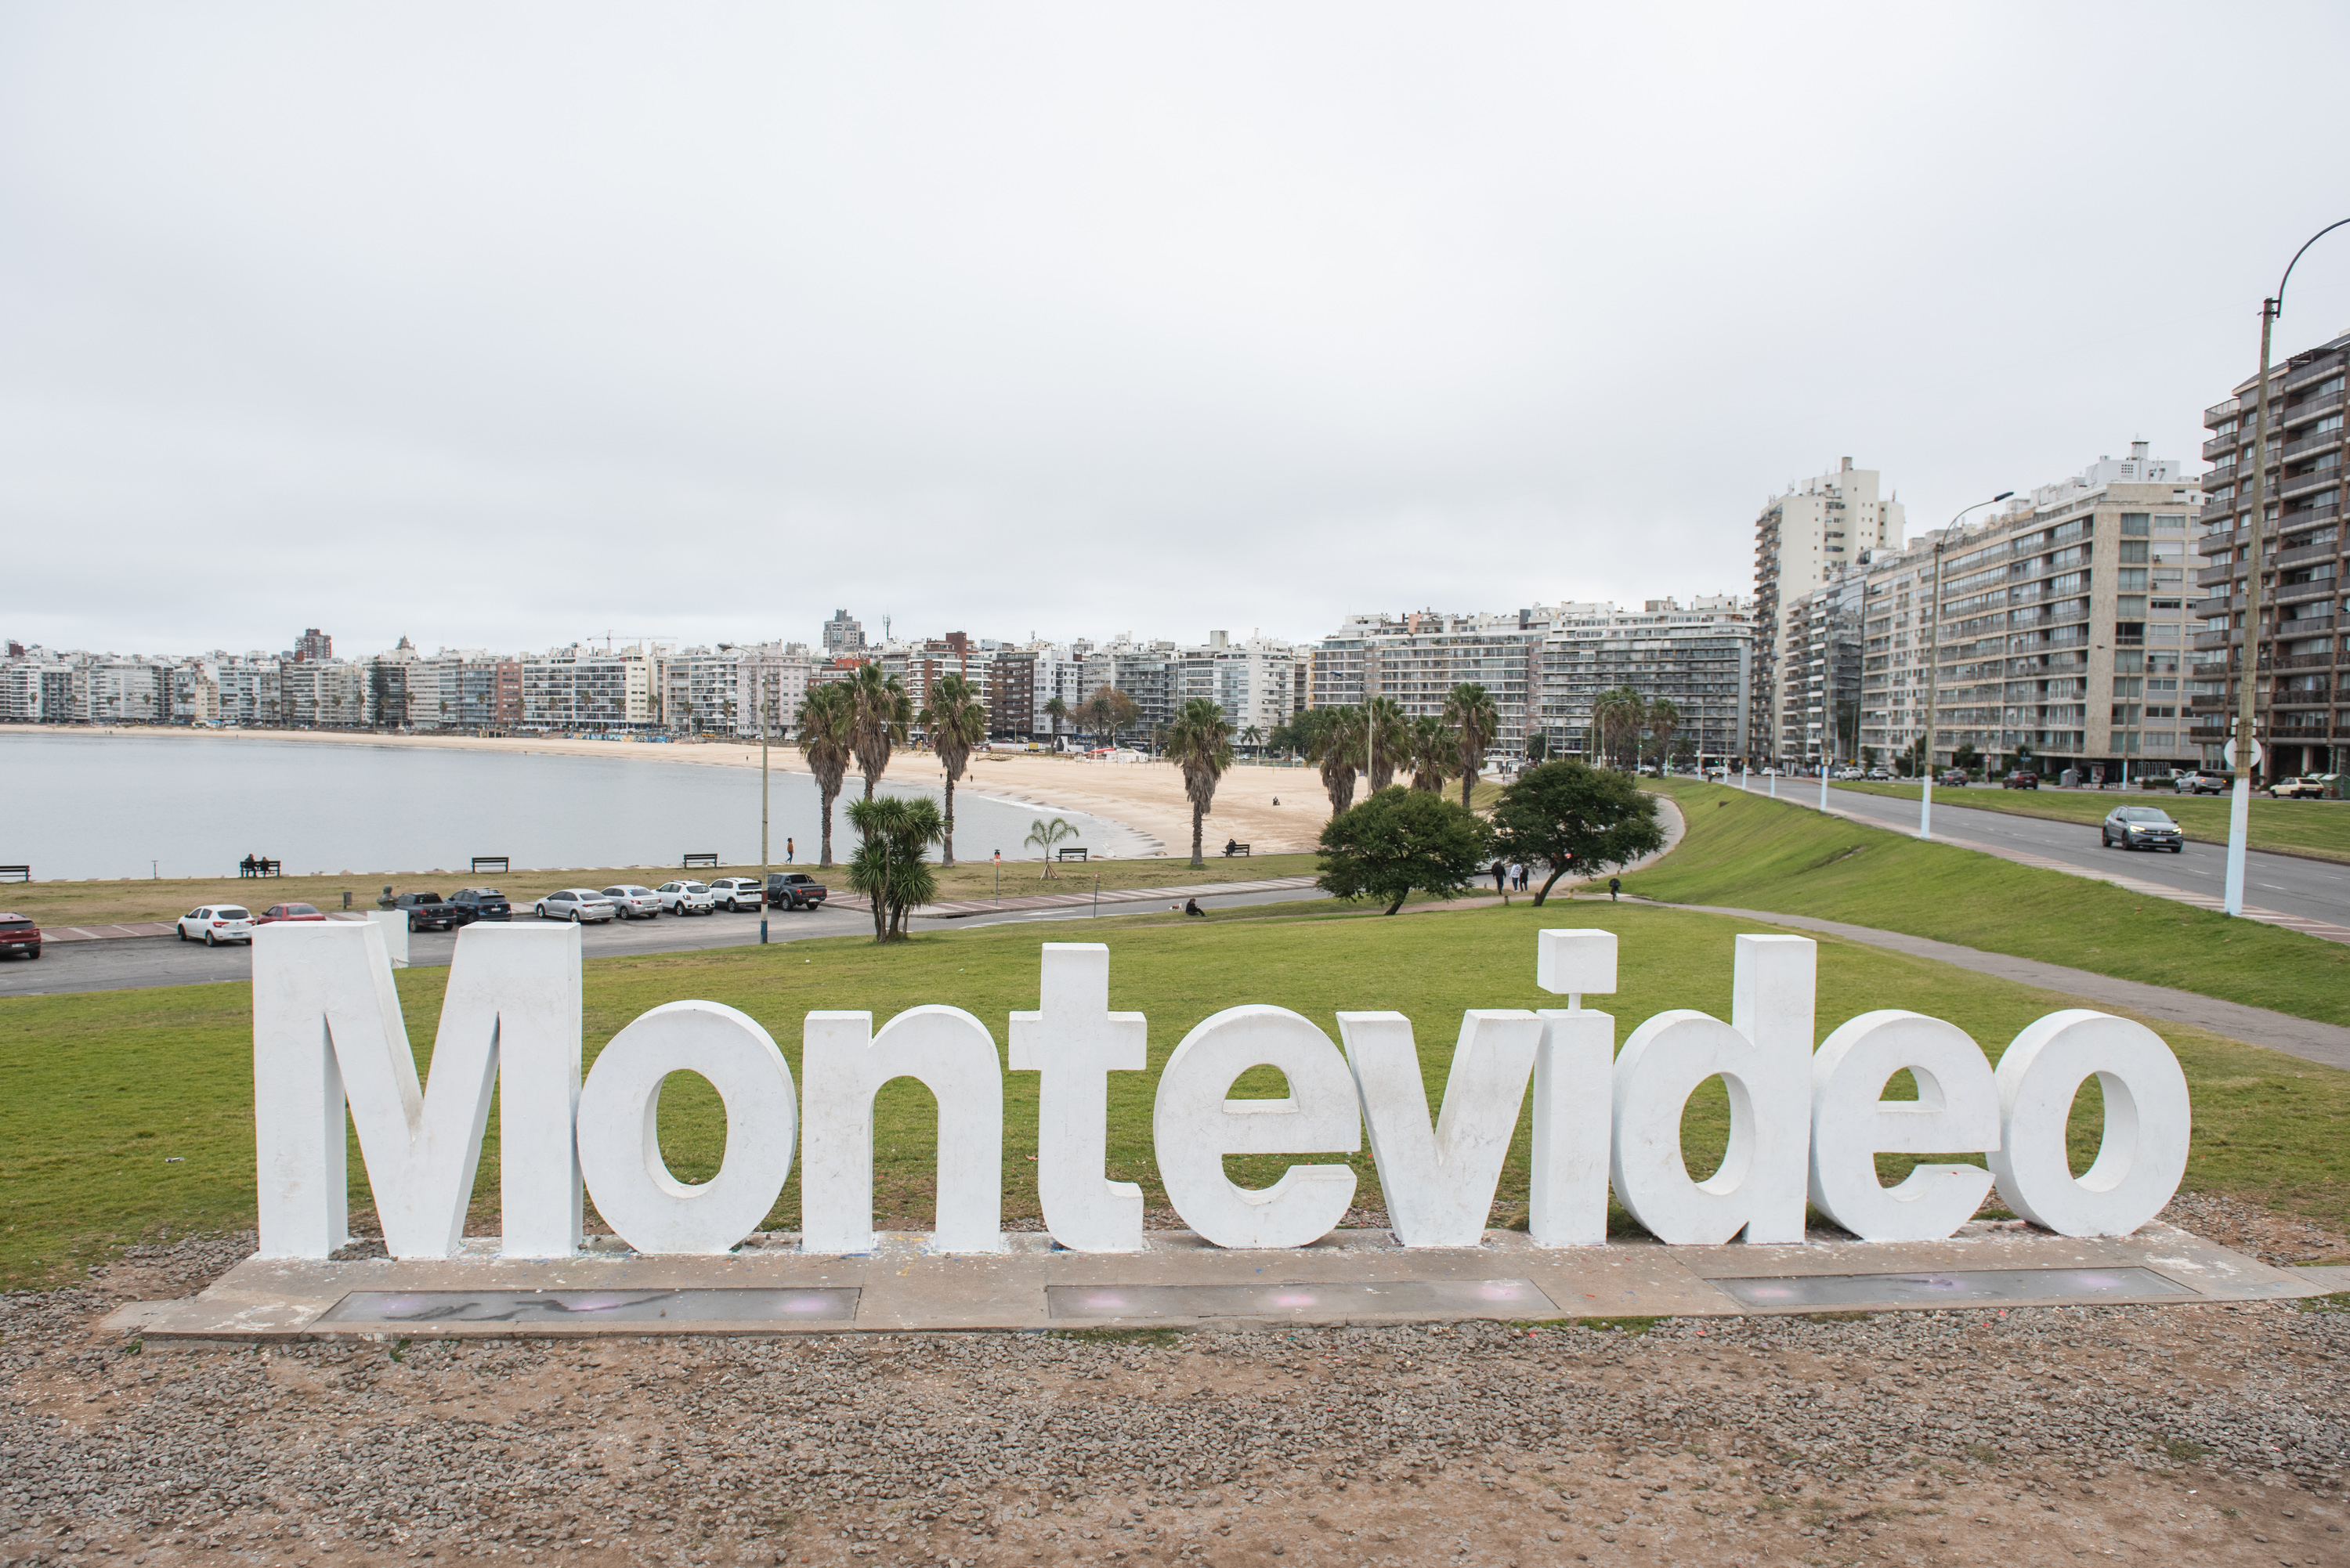 Cartel Montevideo en Kibón